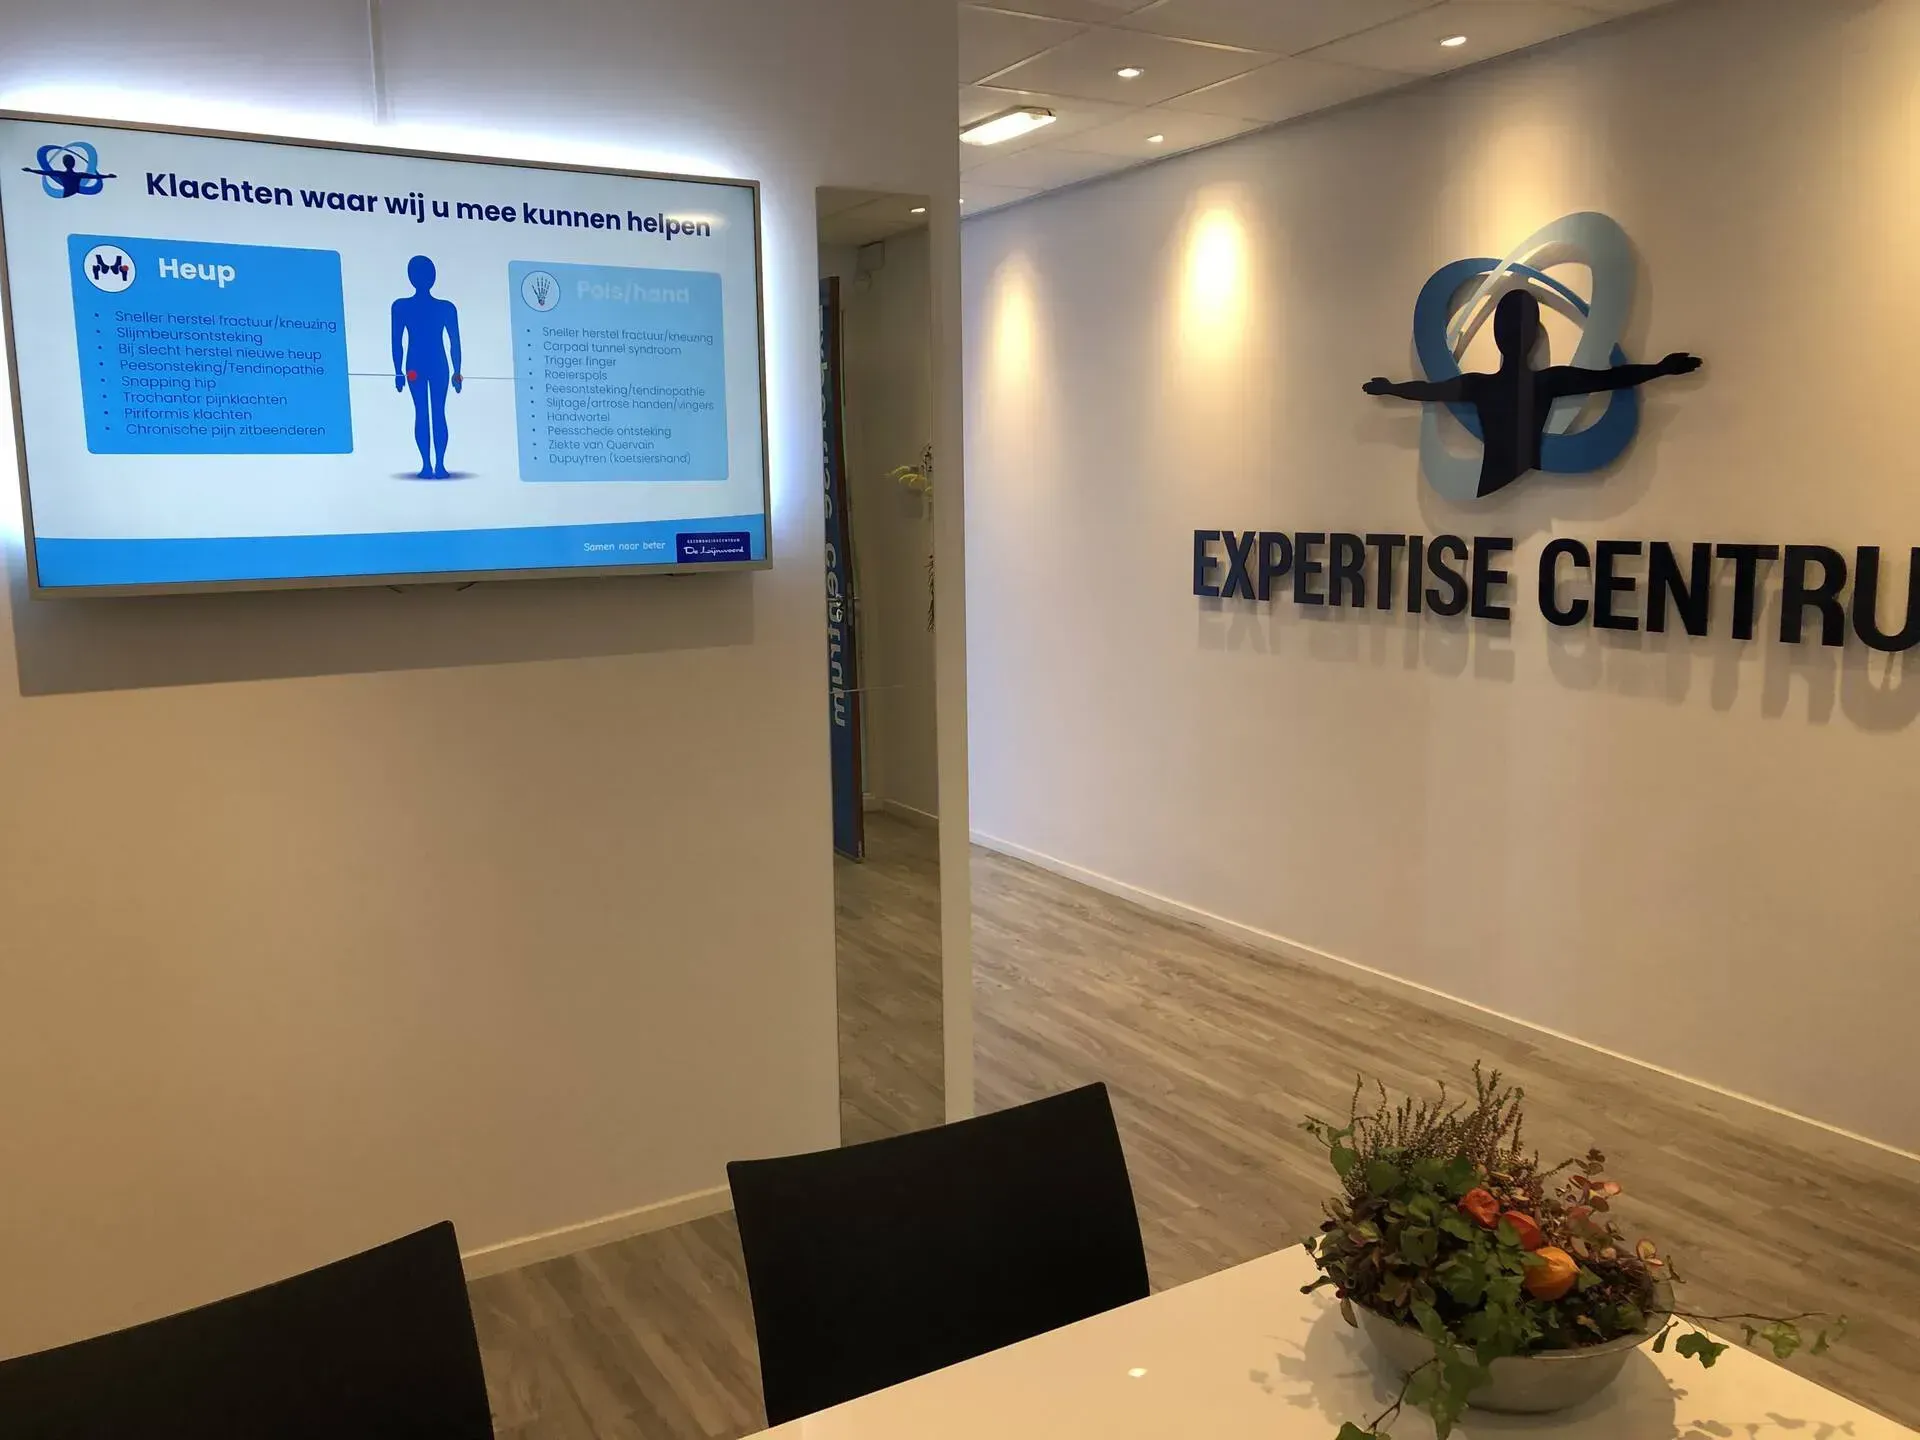 Uitbreiding expertise centrum in Beilen